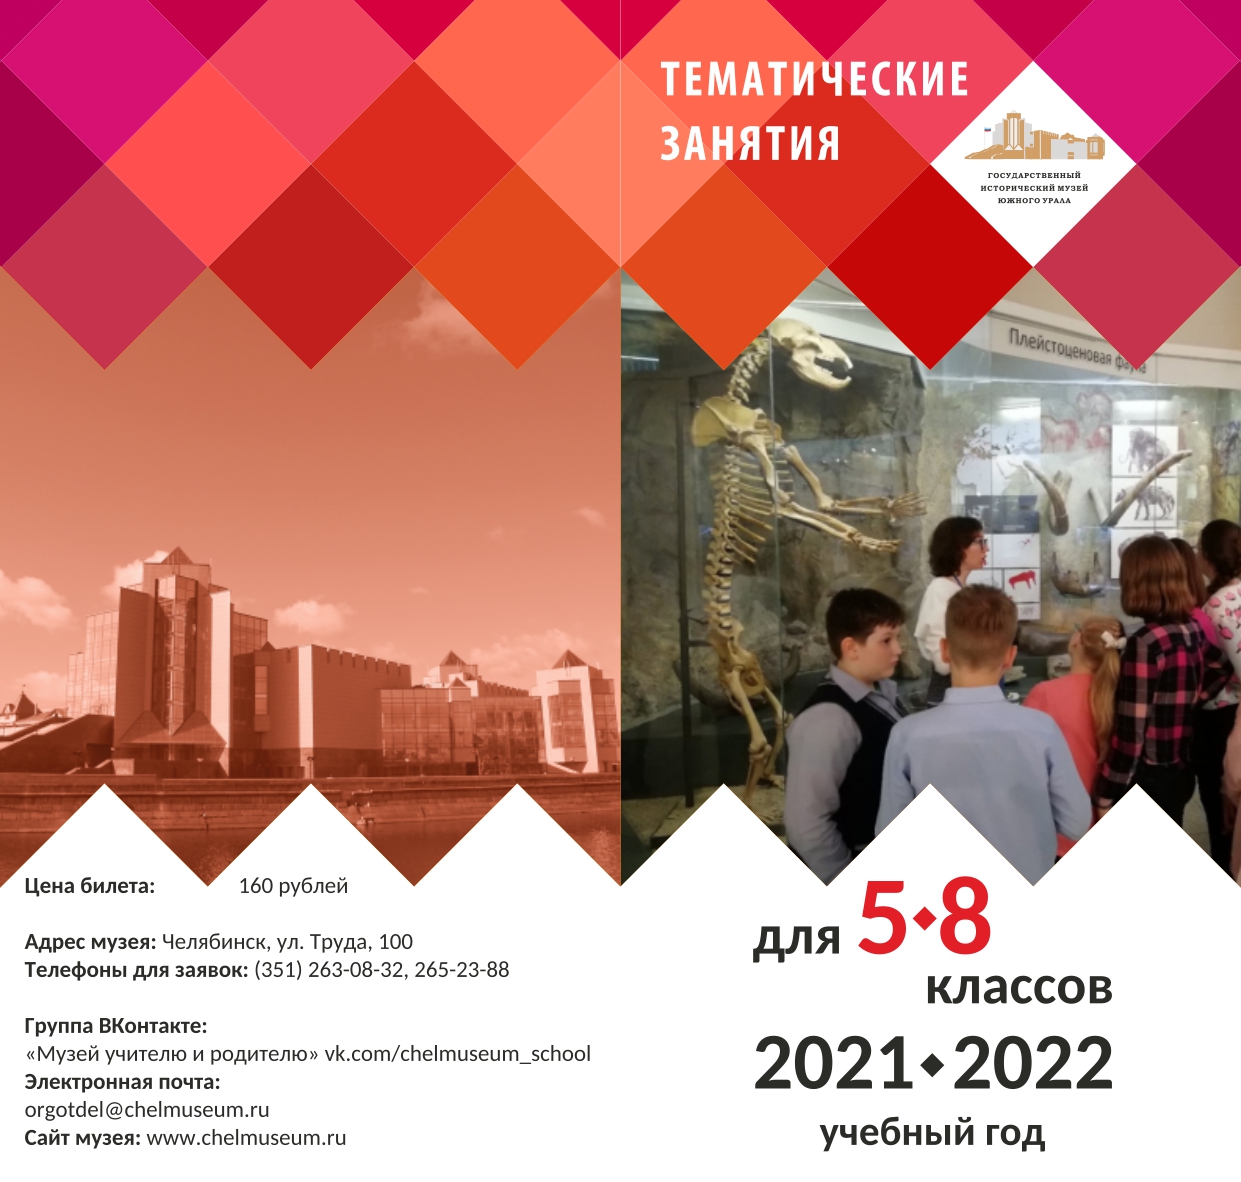 Buklet_tematicheskie_zanyatia_2021-2022_page-0003.jpg